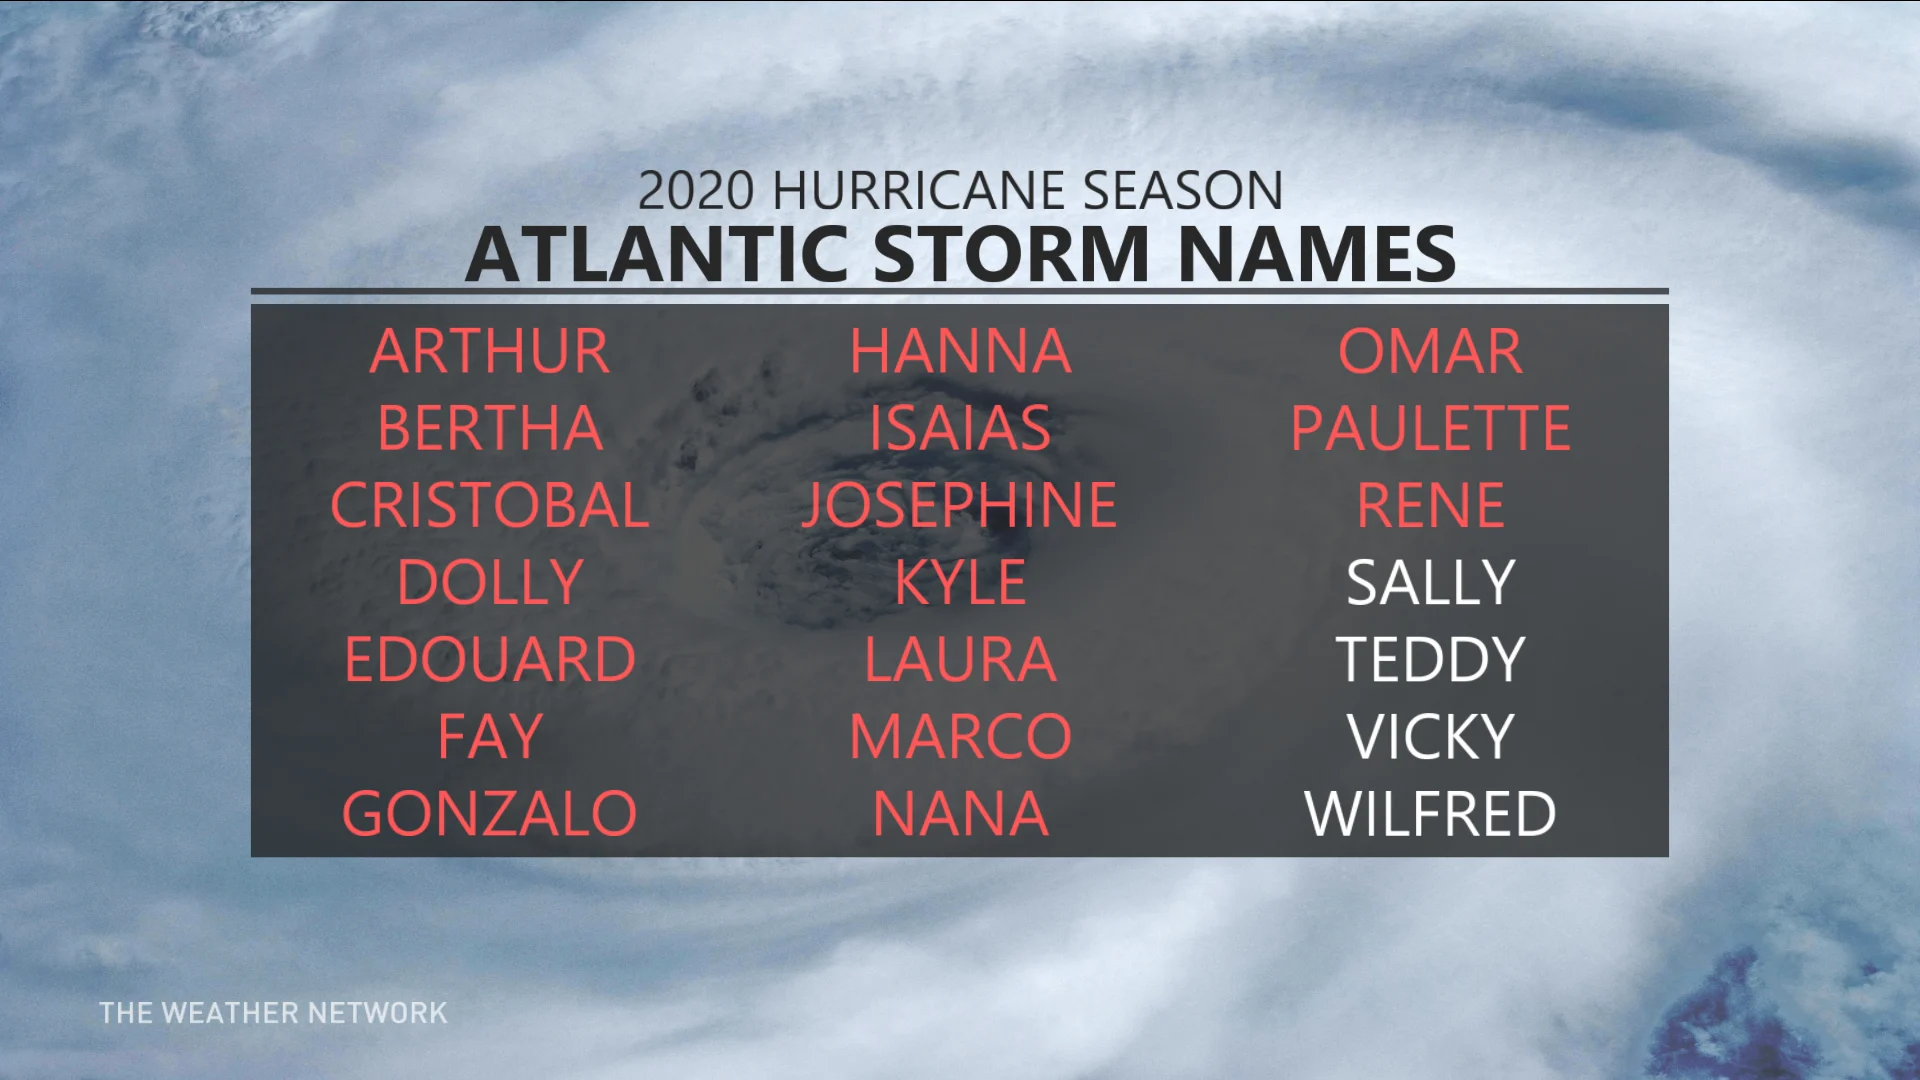 Atlantic Hurricane Names used in 2020